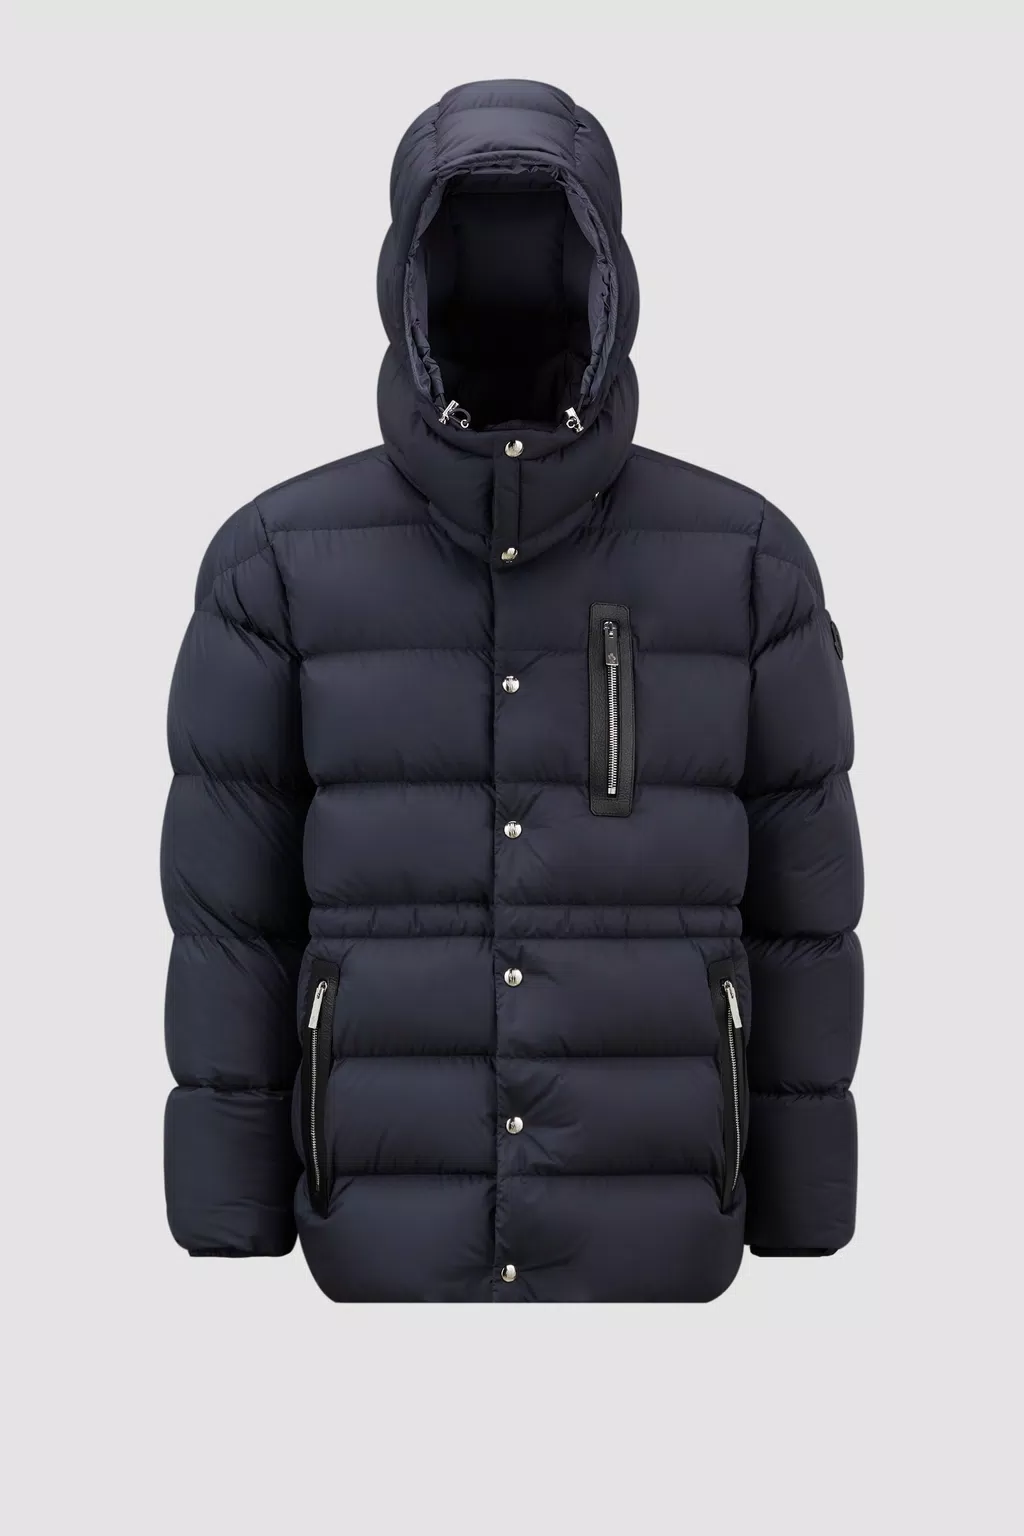 Coats & Jackets for Men - Outerwear | Moncler GB